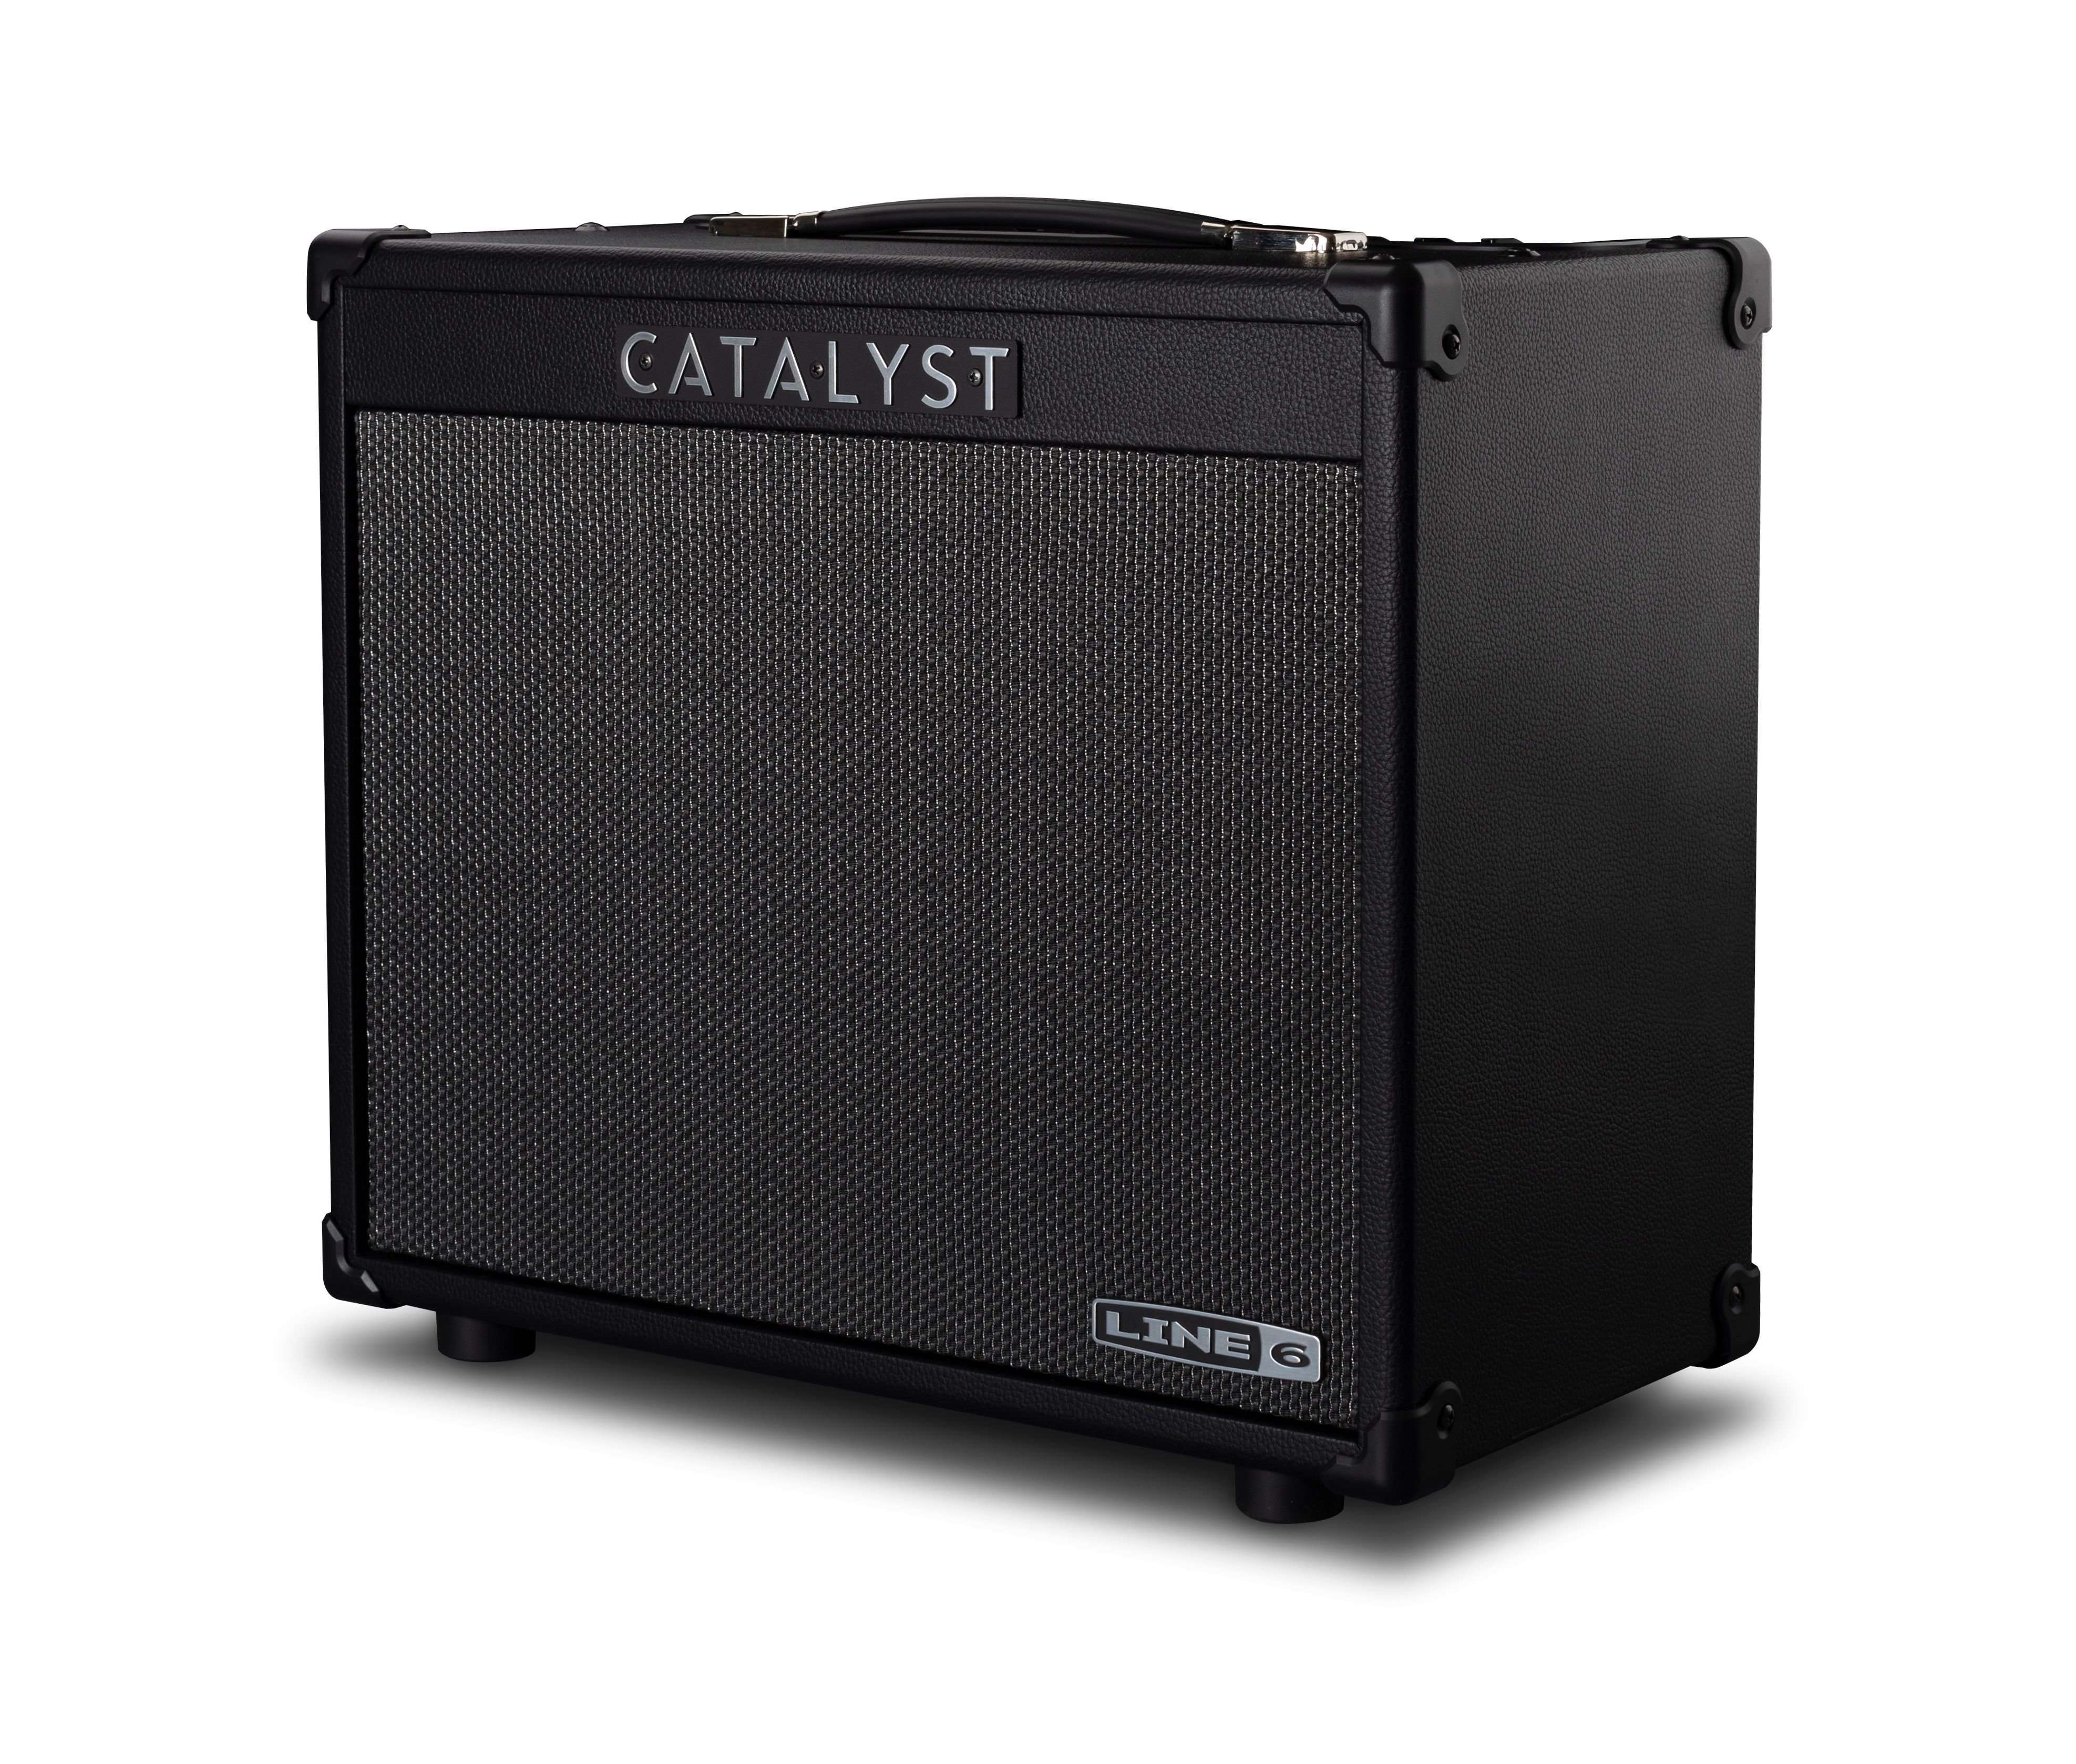 Line 6 Catalyst Combo 60w 1x12 - Combo amplificador para guitarra eléctrica - Variation 3